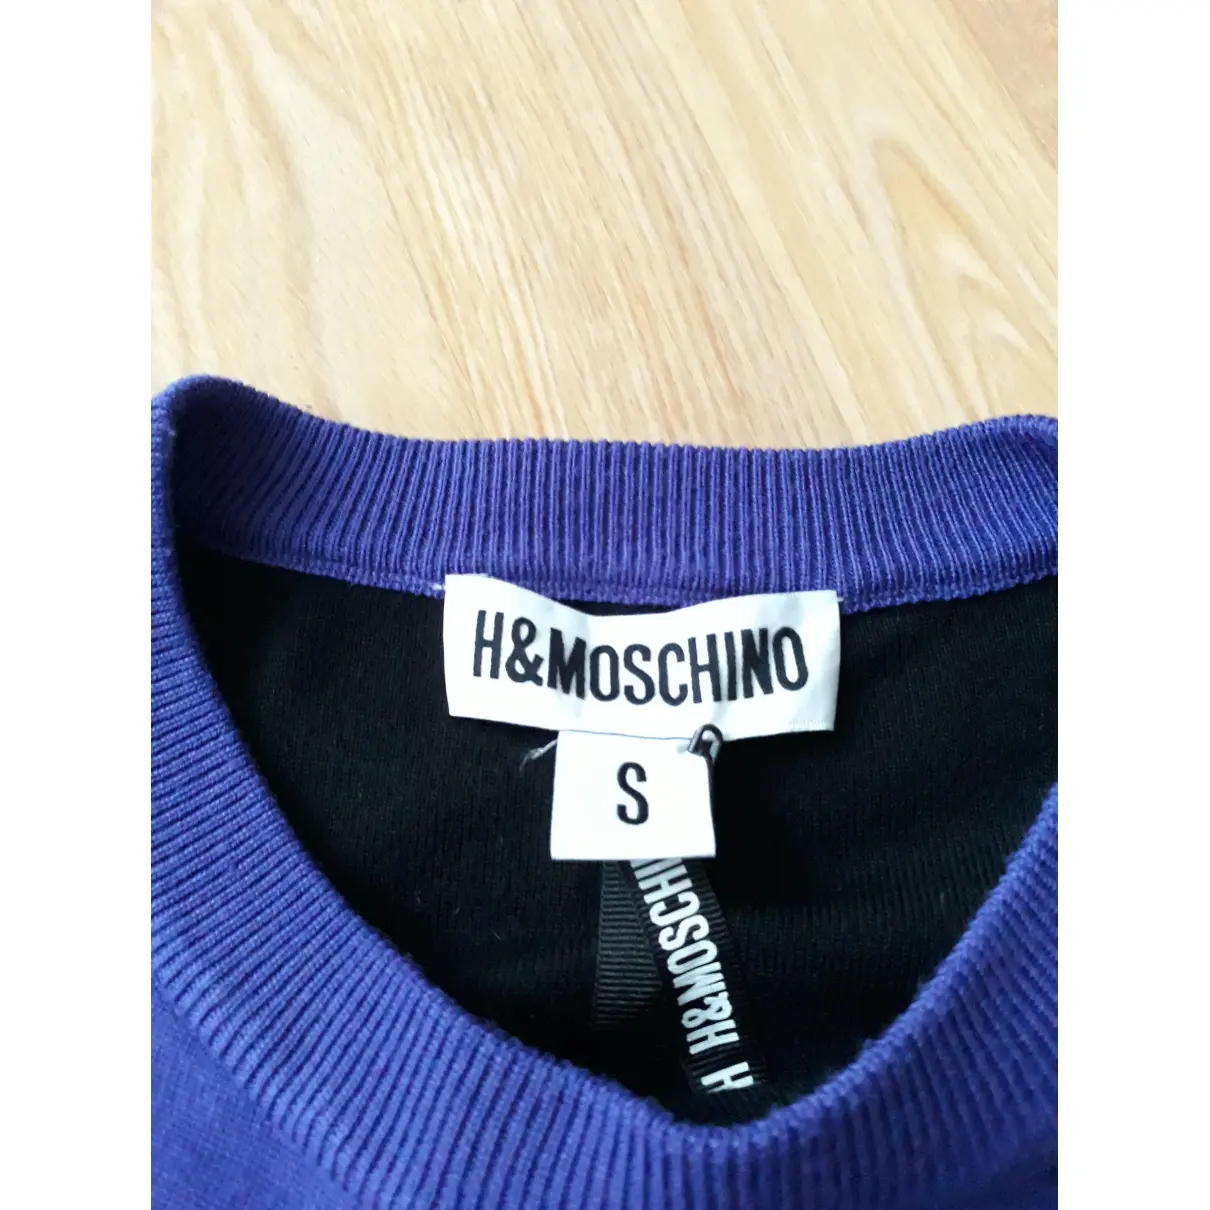 Luxury Moschino for H&M Knitwear Women